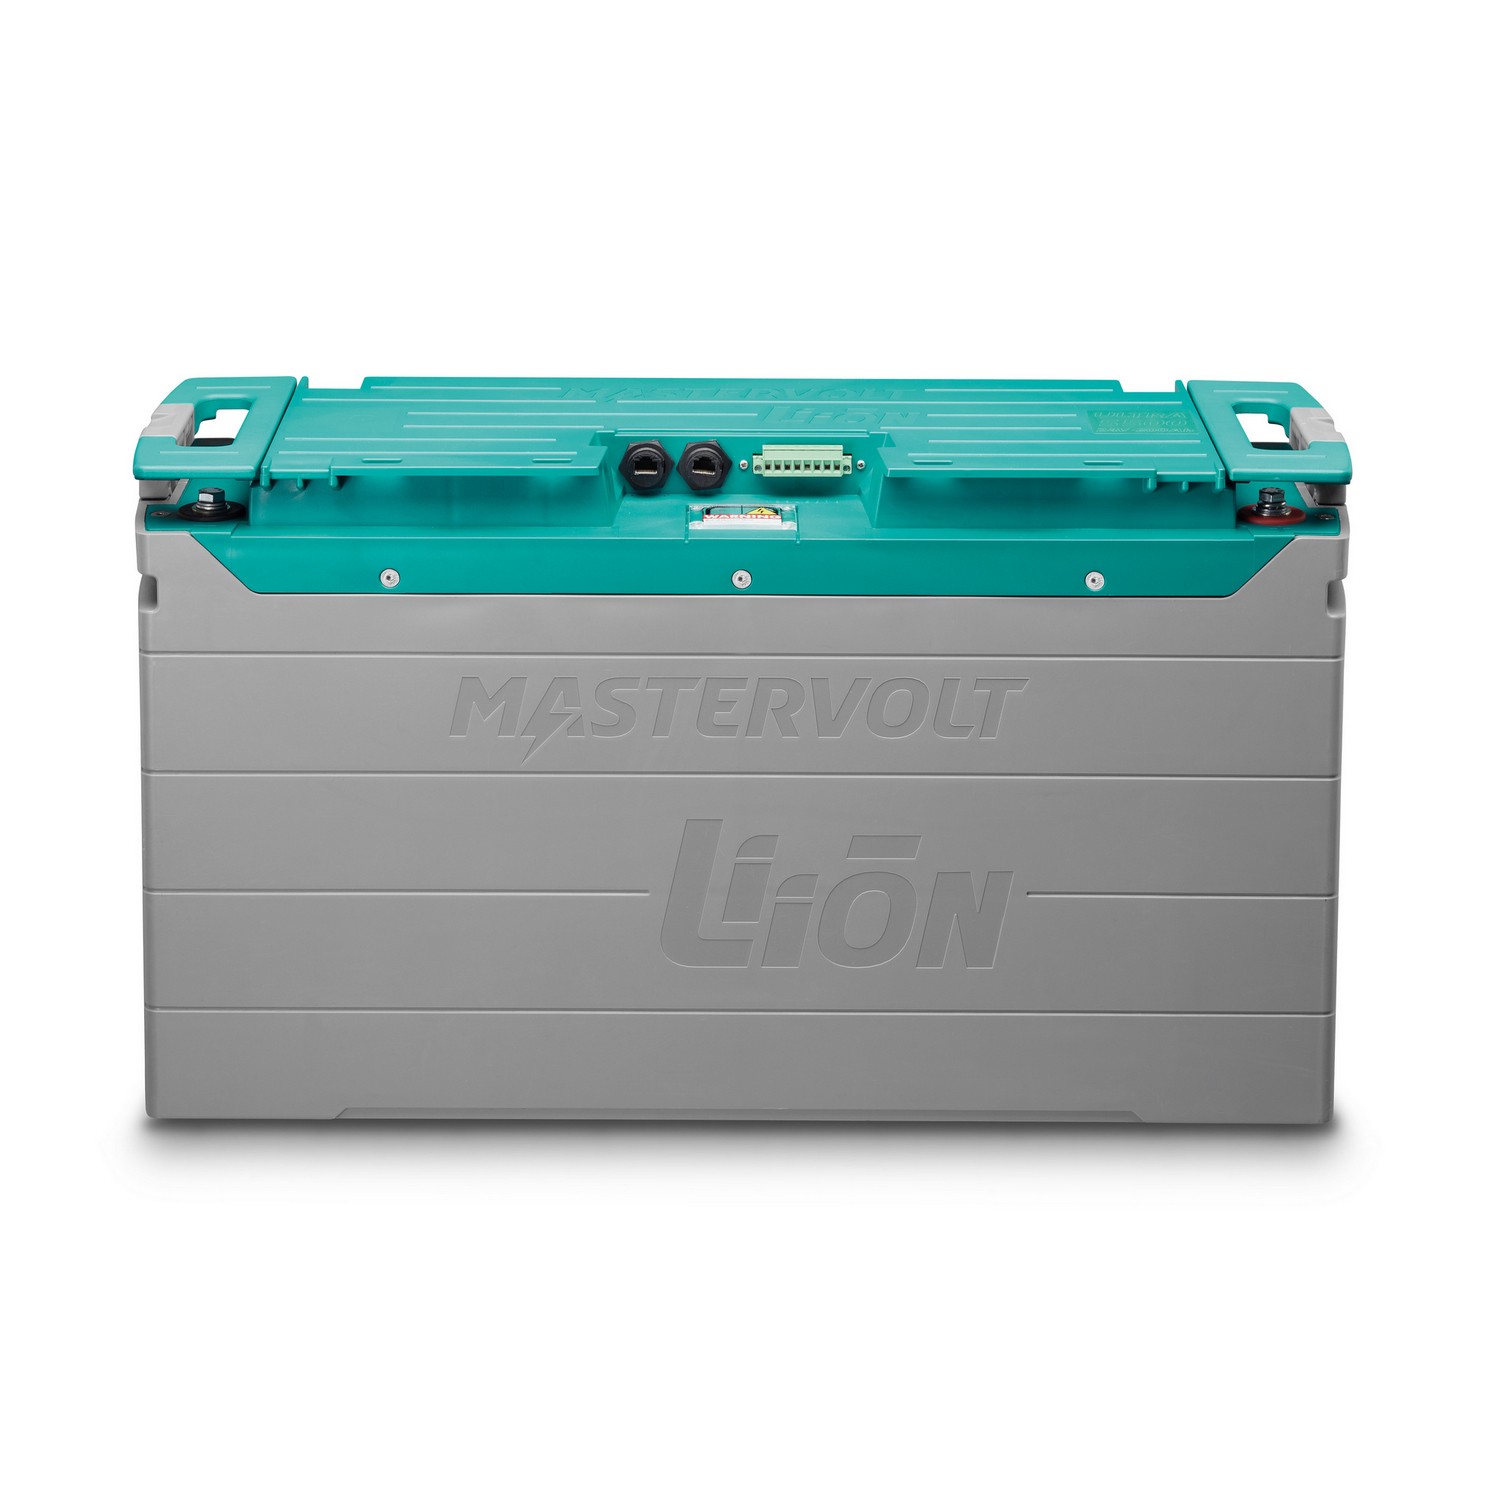 Литий-ионный аккумулятор Mastervolt MLI Ultra - CZone 24/5500 66025500 24В 200Ач 5500Втч 622x197x355мм IP65